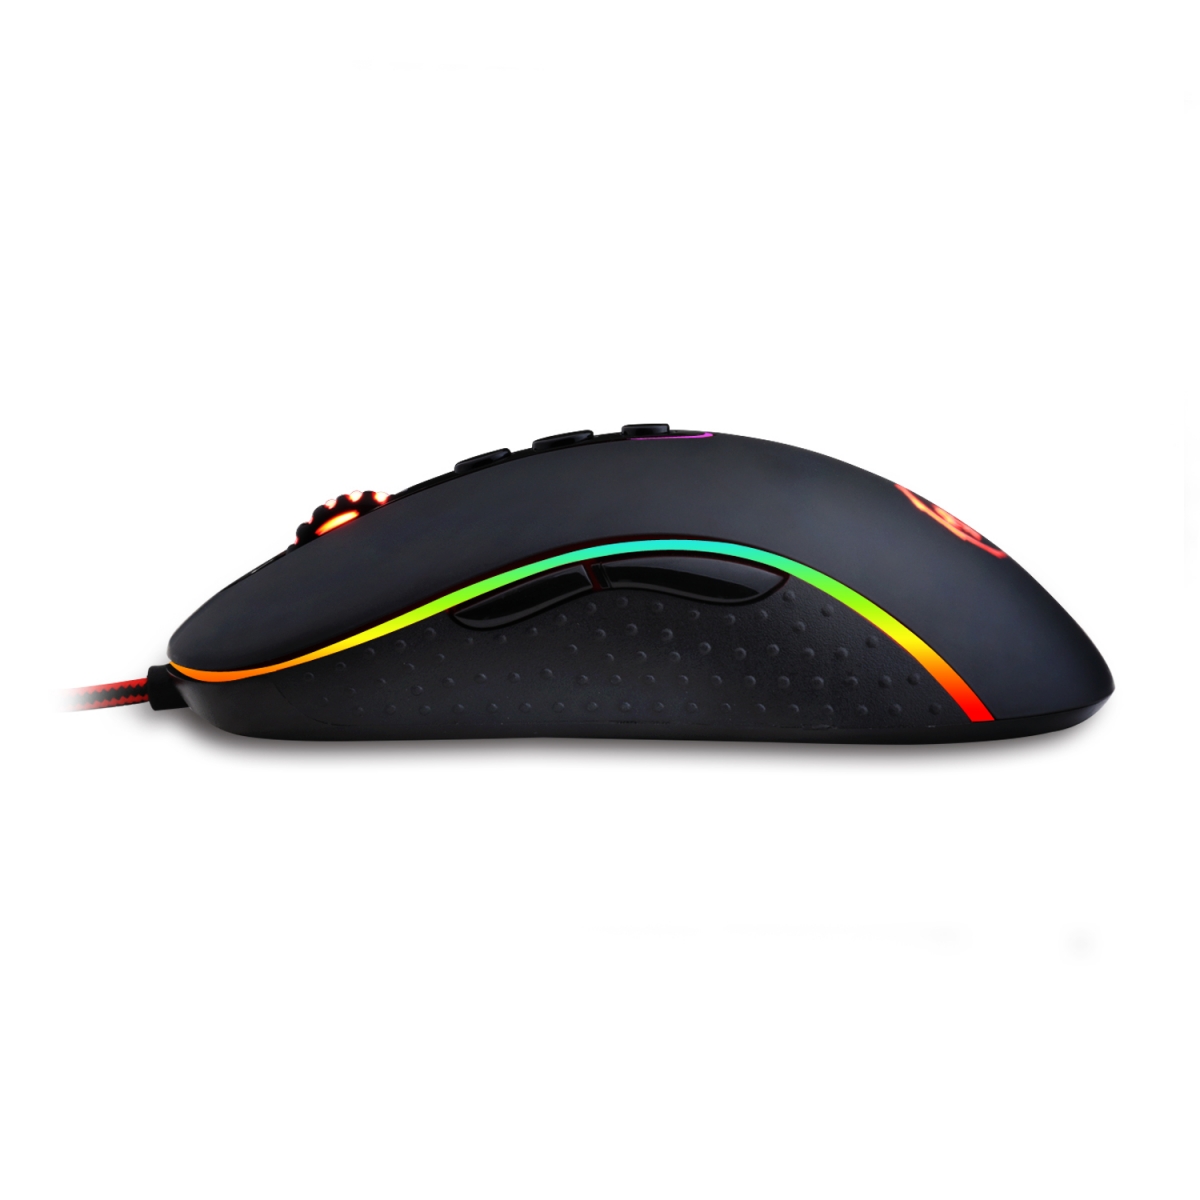 Mouse Gamer Redragon Phoenix Chroma M702-2 RGB, 10000 DPI, 9 Botões Programáveis, Black